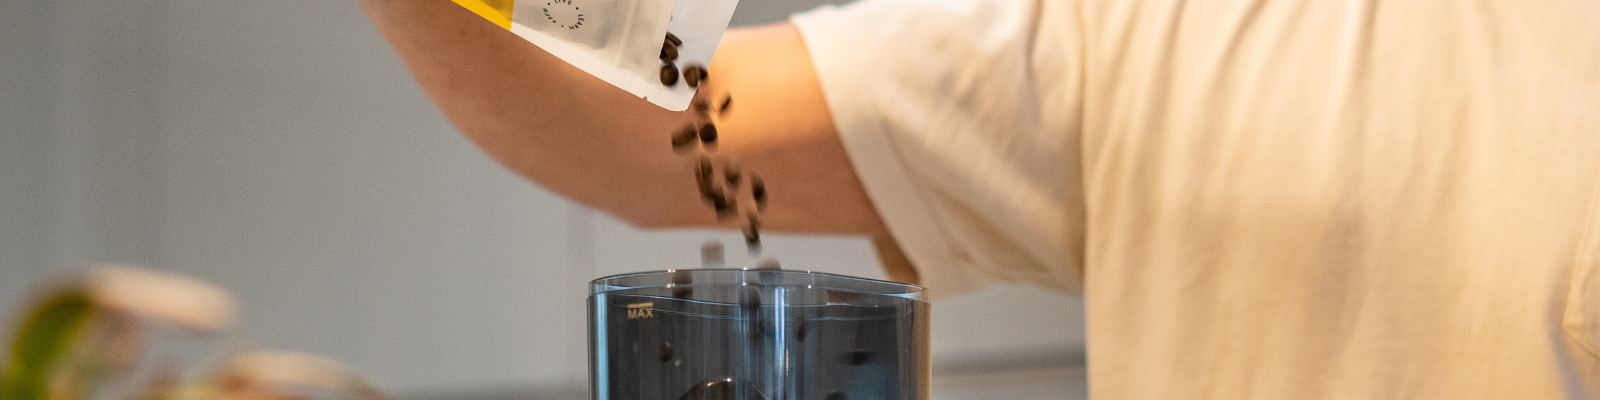 coffee scoop spoon to measure 15g of ground into beaker